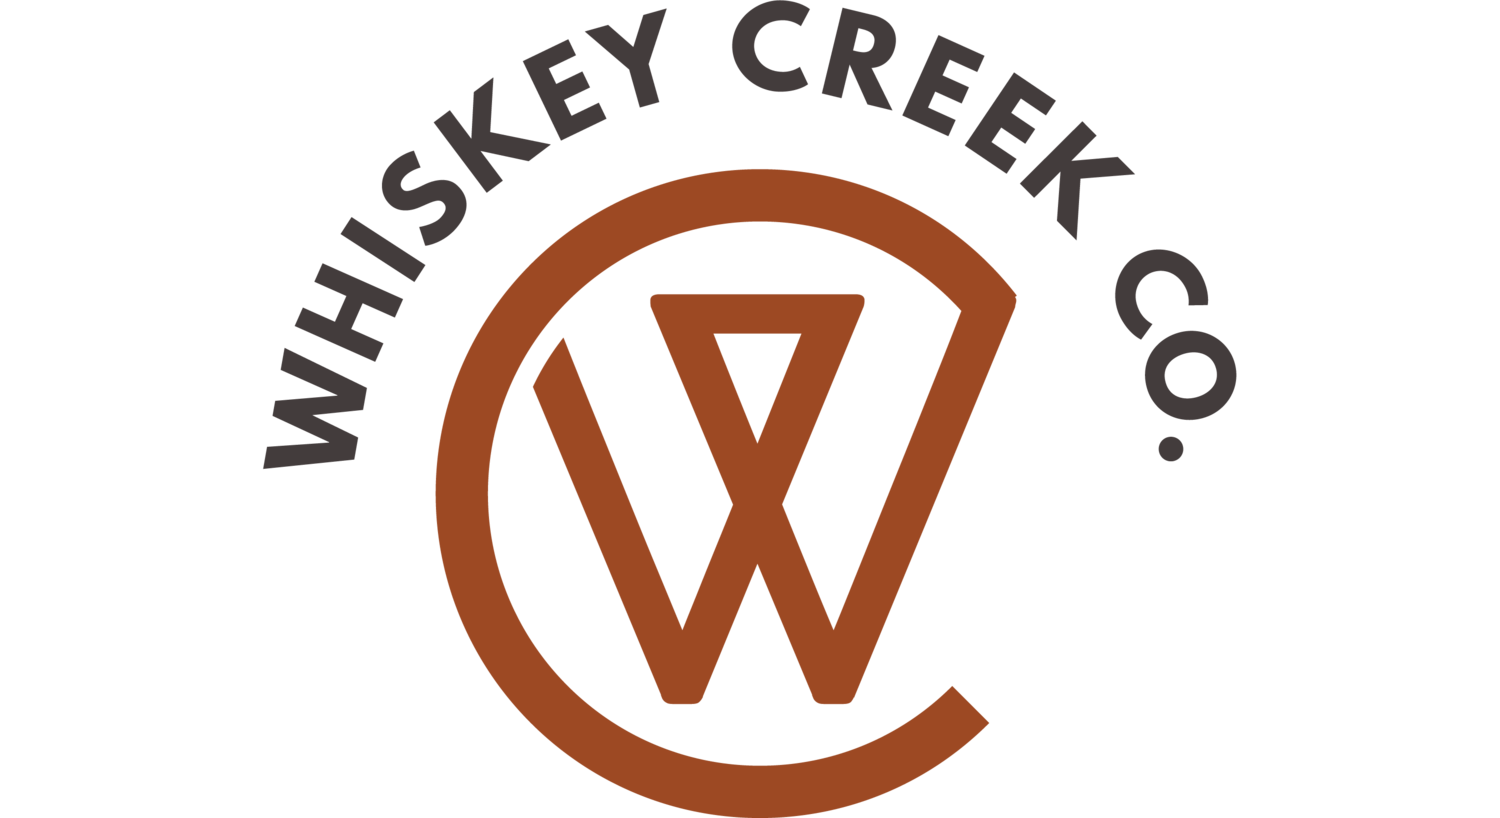 Whiskey Creek Logo - Whiskey Creek Holdings Co.